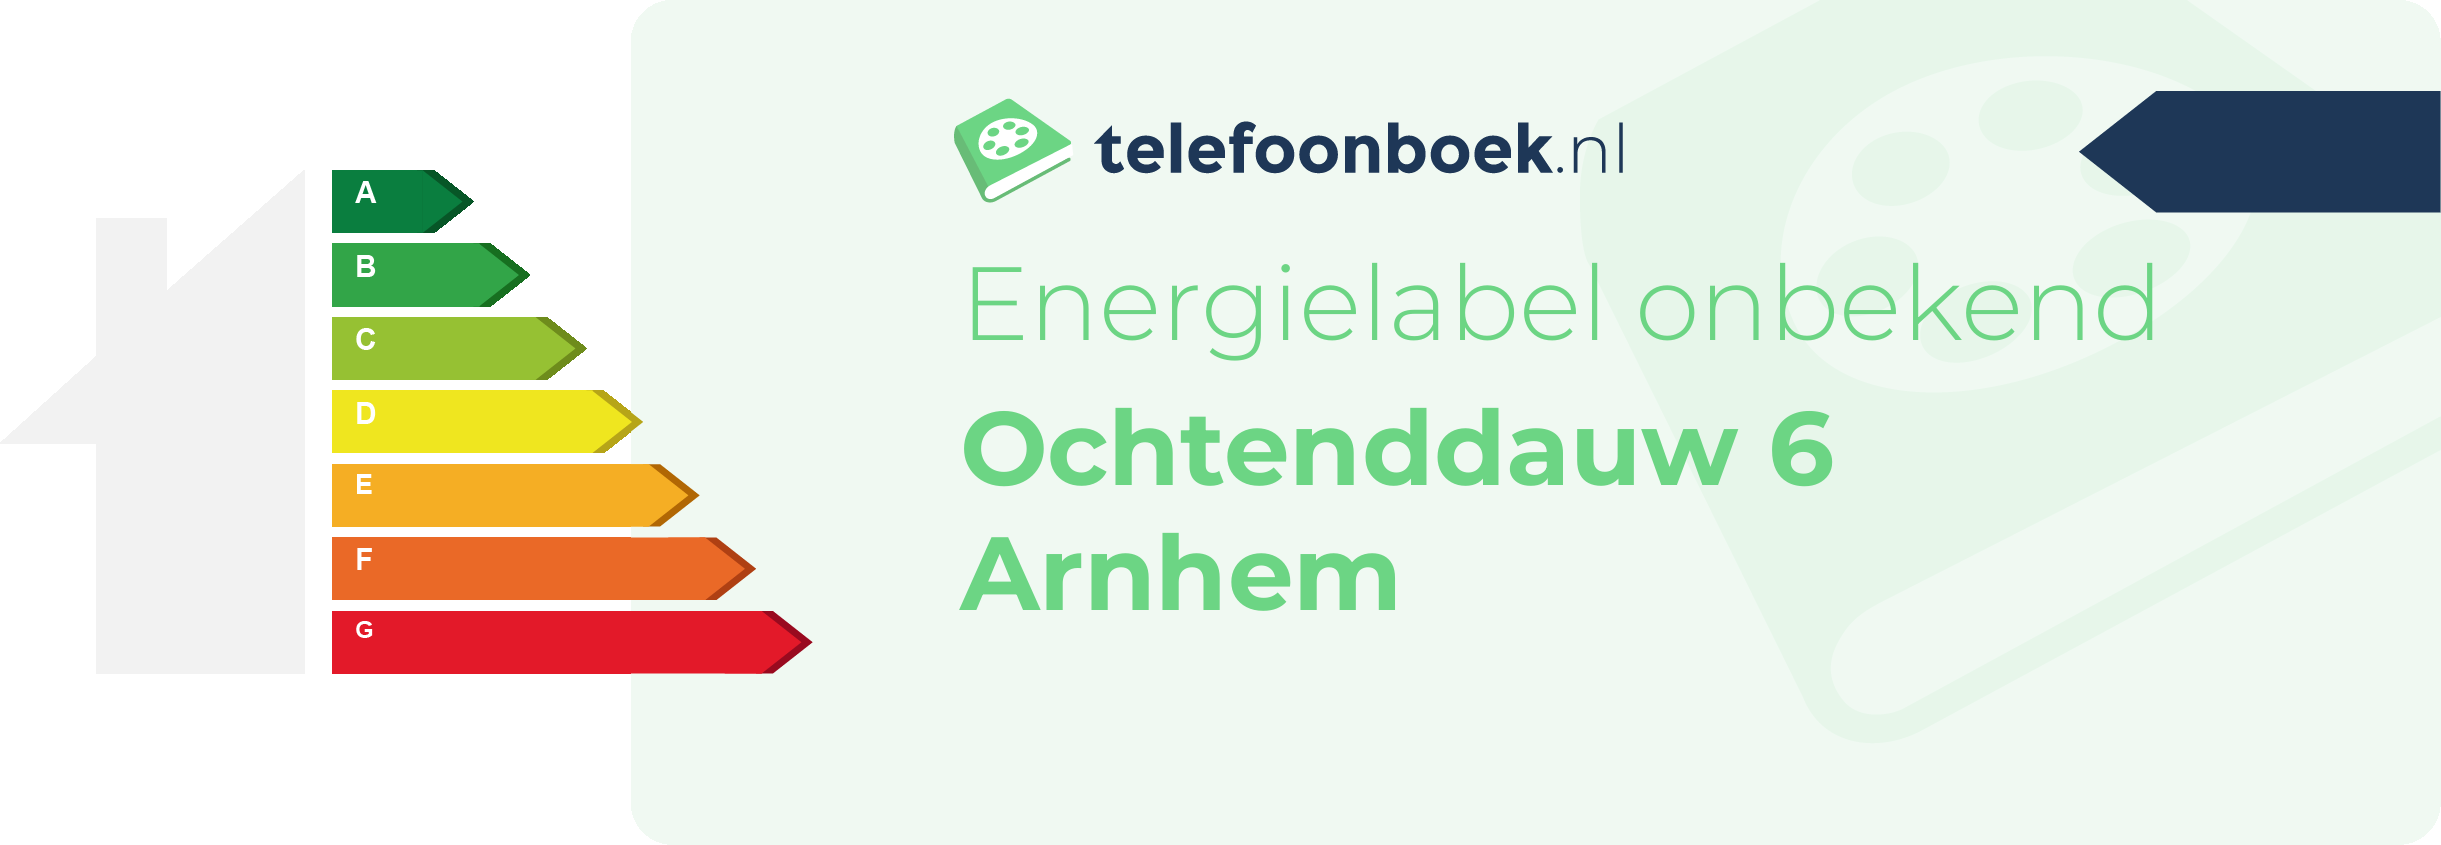 Energielabel Ochtenddauw 6 Arnhem